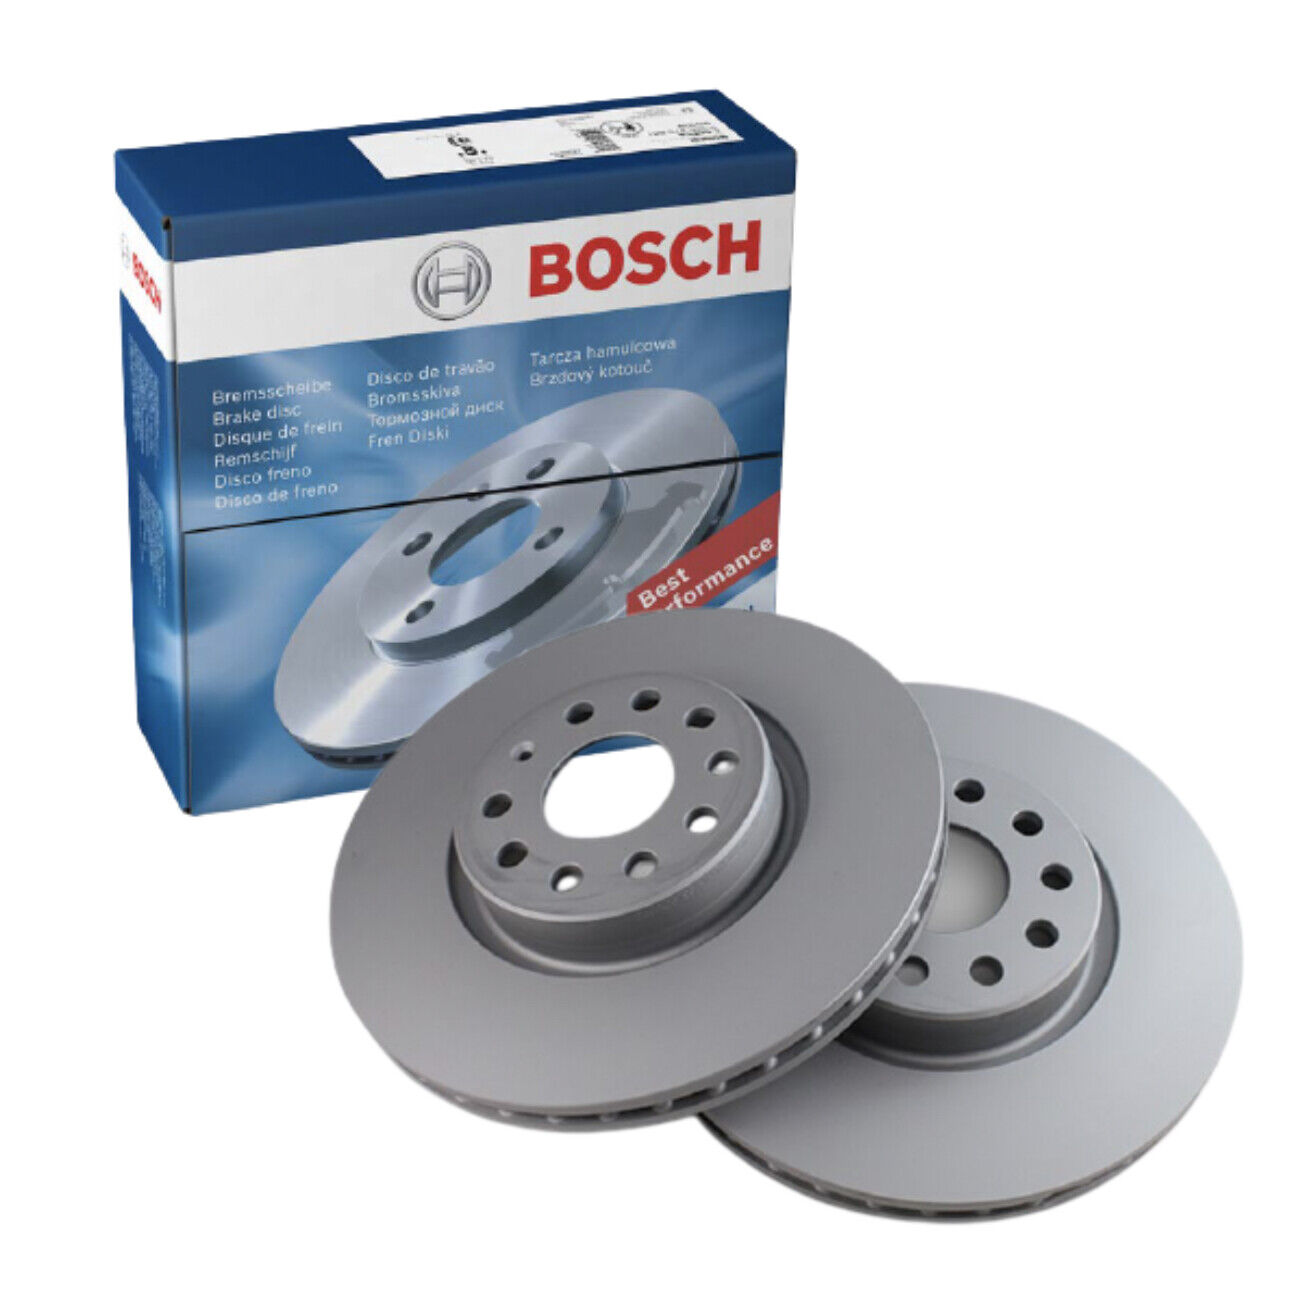 Bosch Front Brake Disc Rotors 312mm BD997 fits VW EOS 1F7, 1F8 2.0 TFSI 3.2  V6